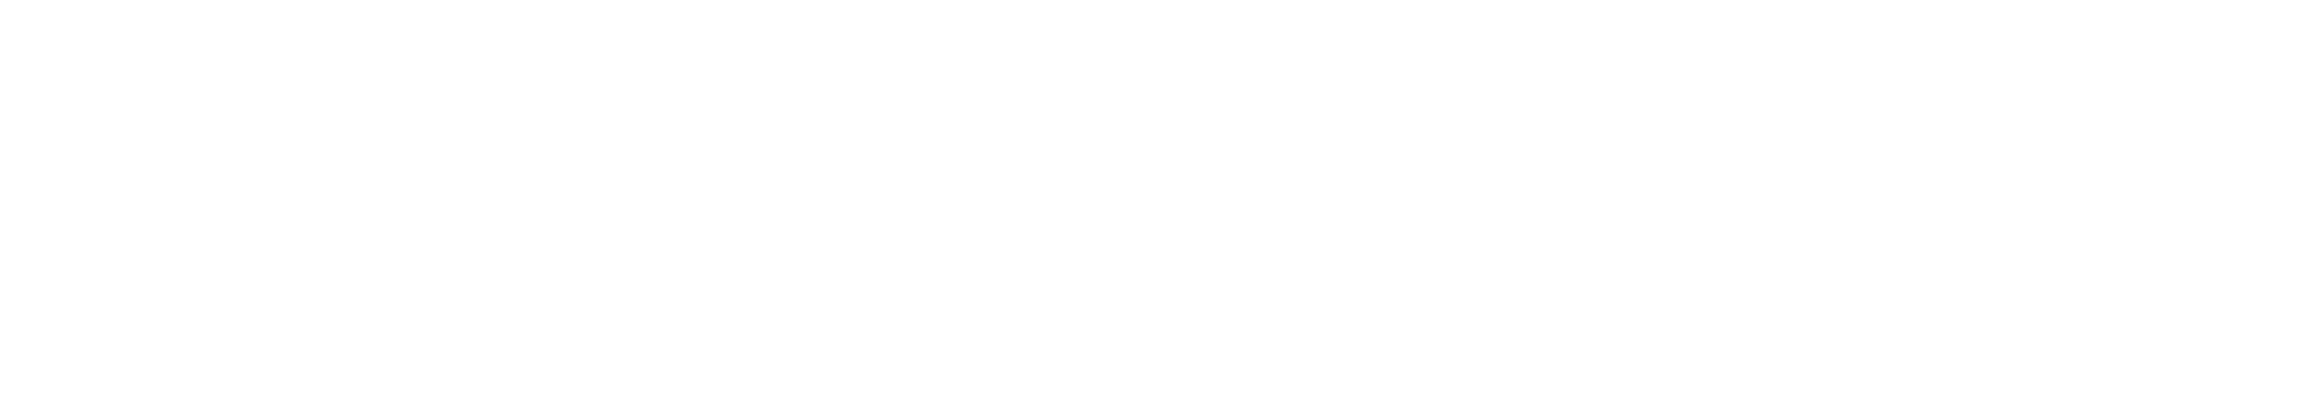 Harbor Group Management logo for Alcove at Seahurst